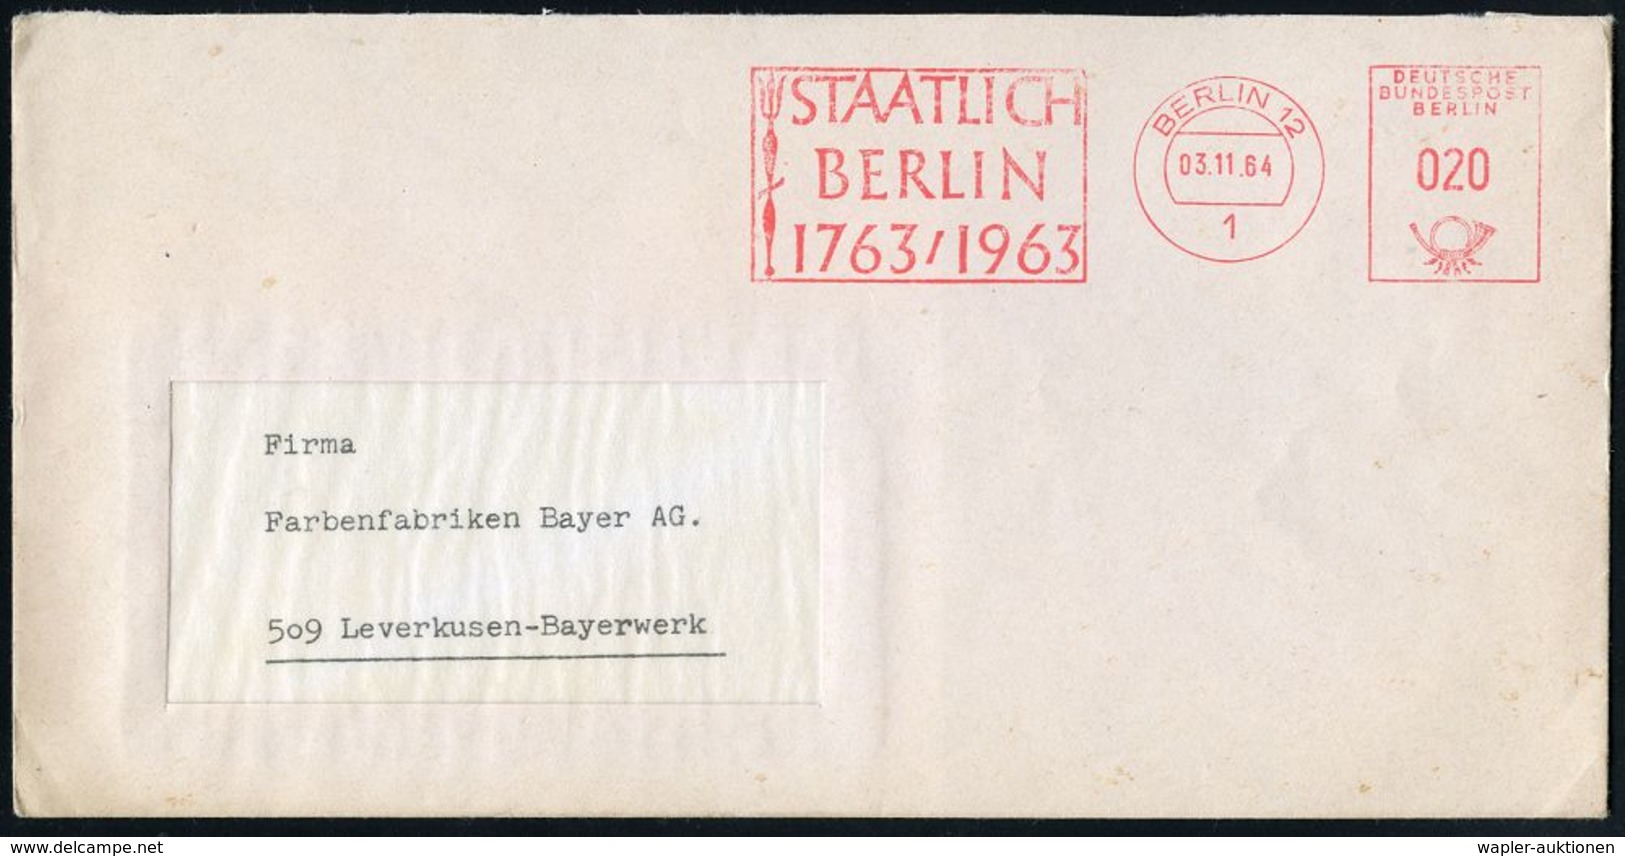 KERAMIK / PORZELLAN / MANUFAKTUREN : 1 BERLIN 12/ STAATLICH/ BERLIN/ 1763-1963 1964 (Nov.) Seltener Jubil.-AFS (Signet)  - Porcelaine